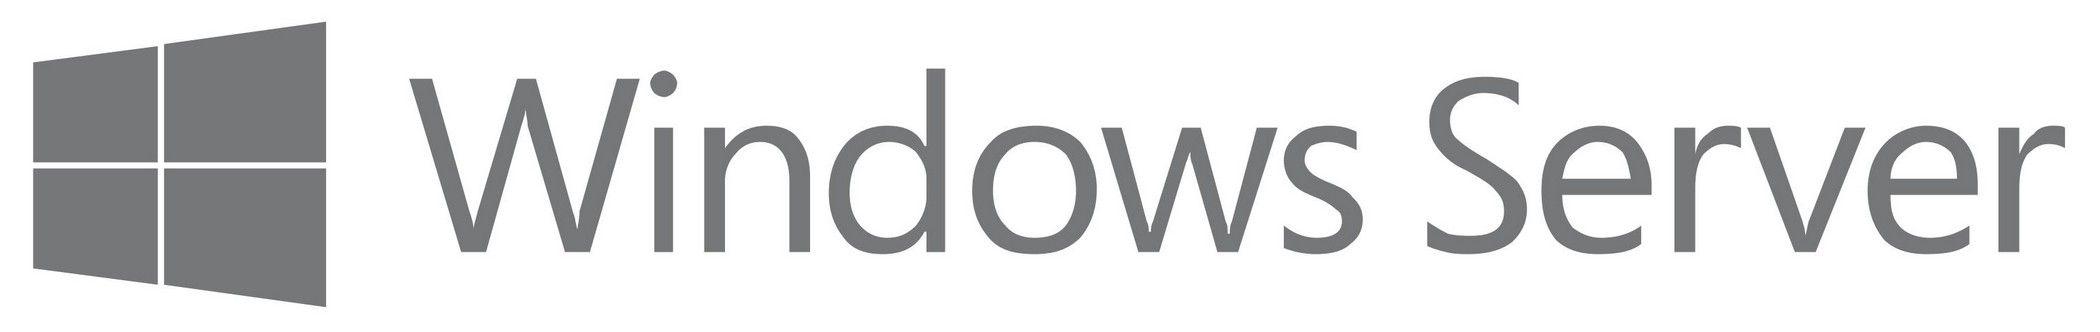 Windows Server Logo - Windows Server Logo Free Vector Download - FreeLogoVectors